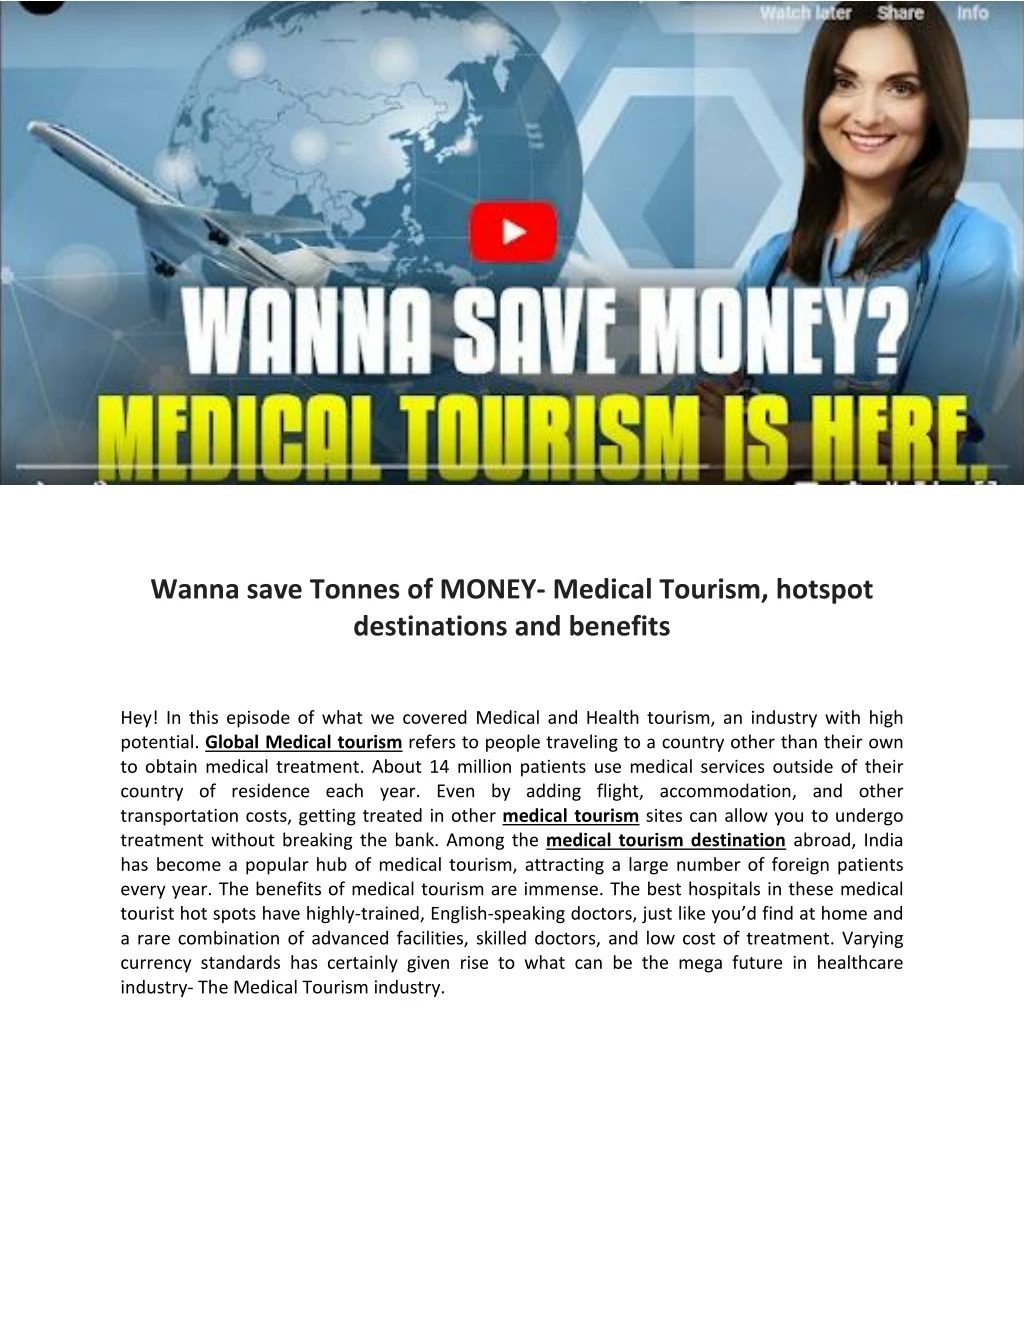 wanna save tonnes of money medical tourism